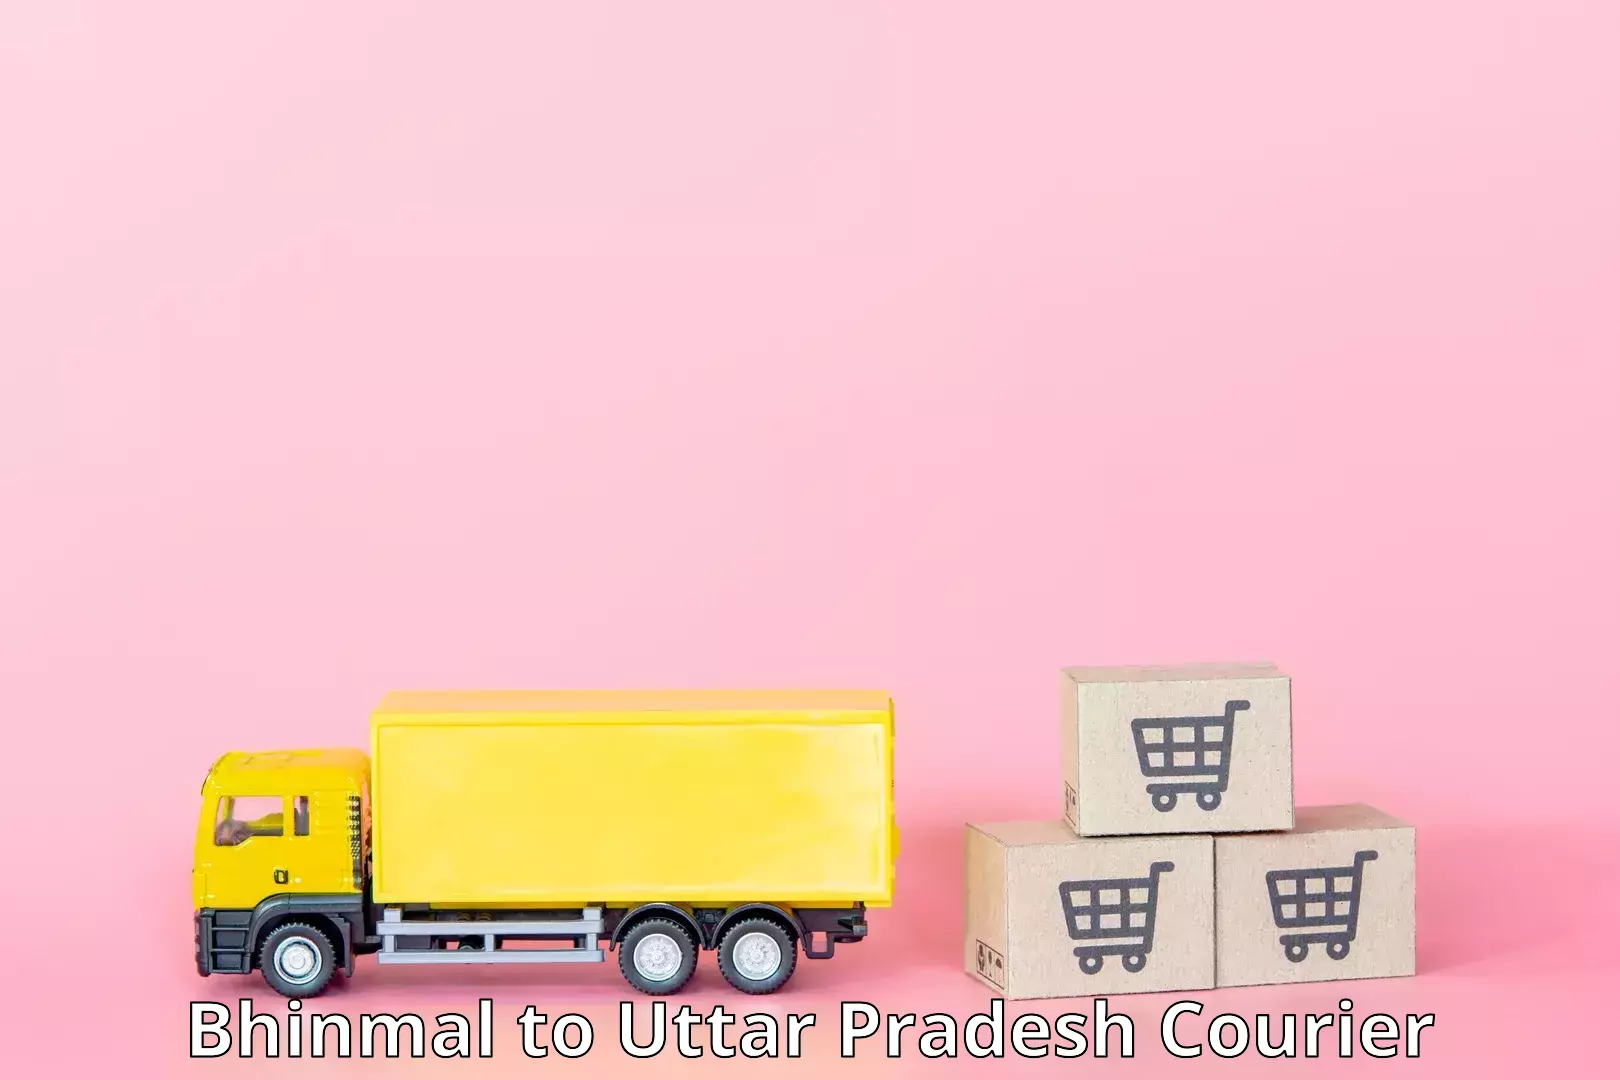 Supply chain efficiency Bhinmal to Uttar Pradesh